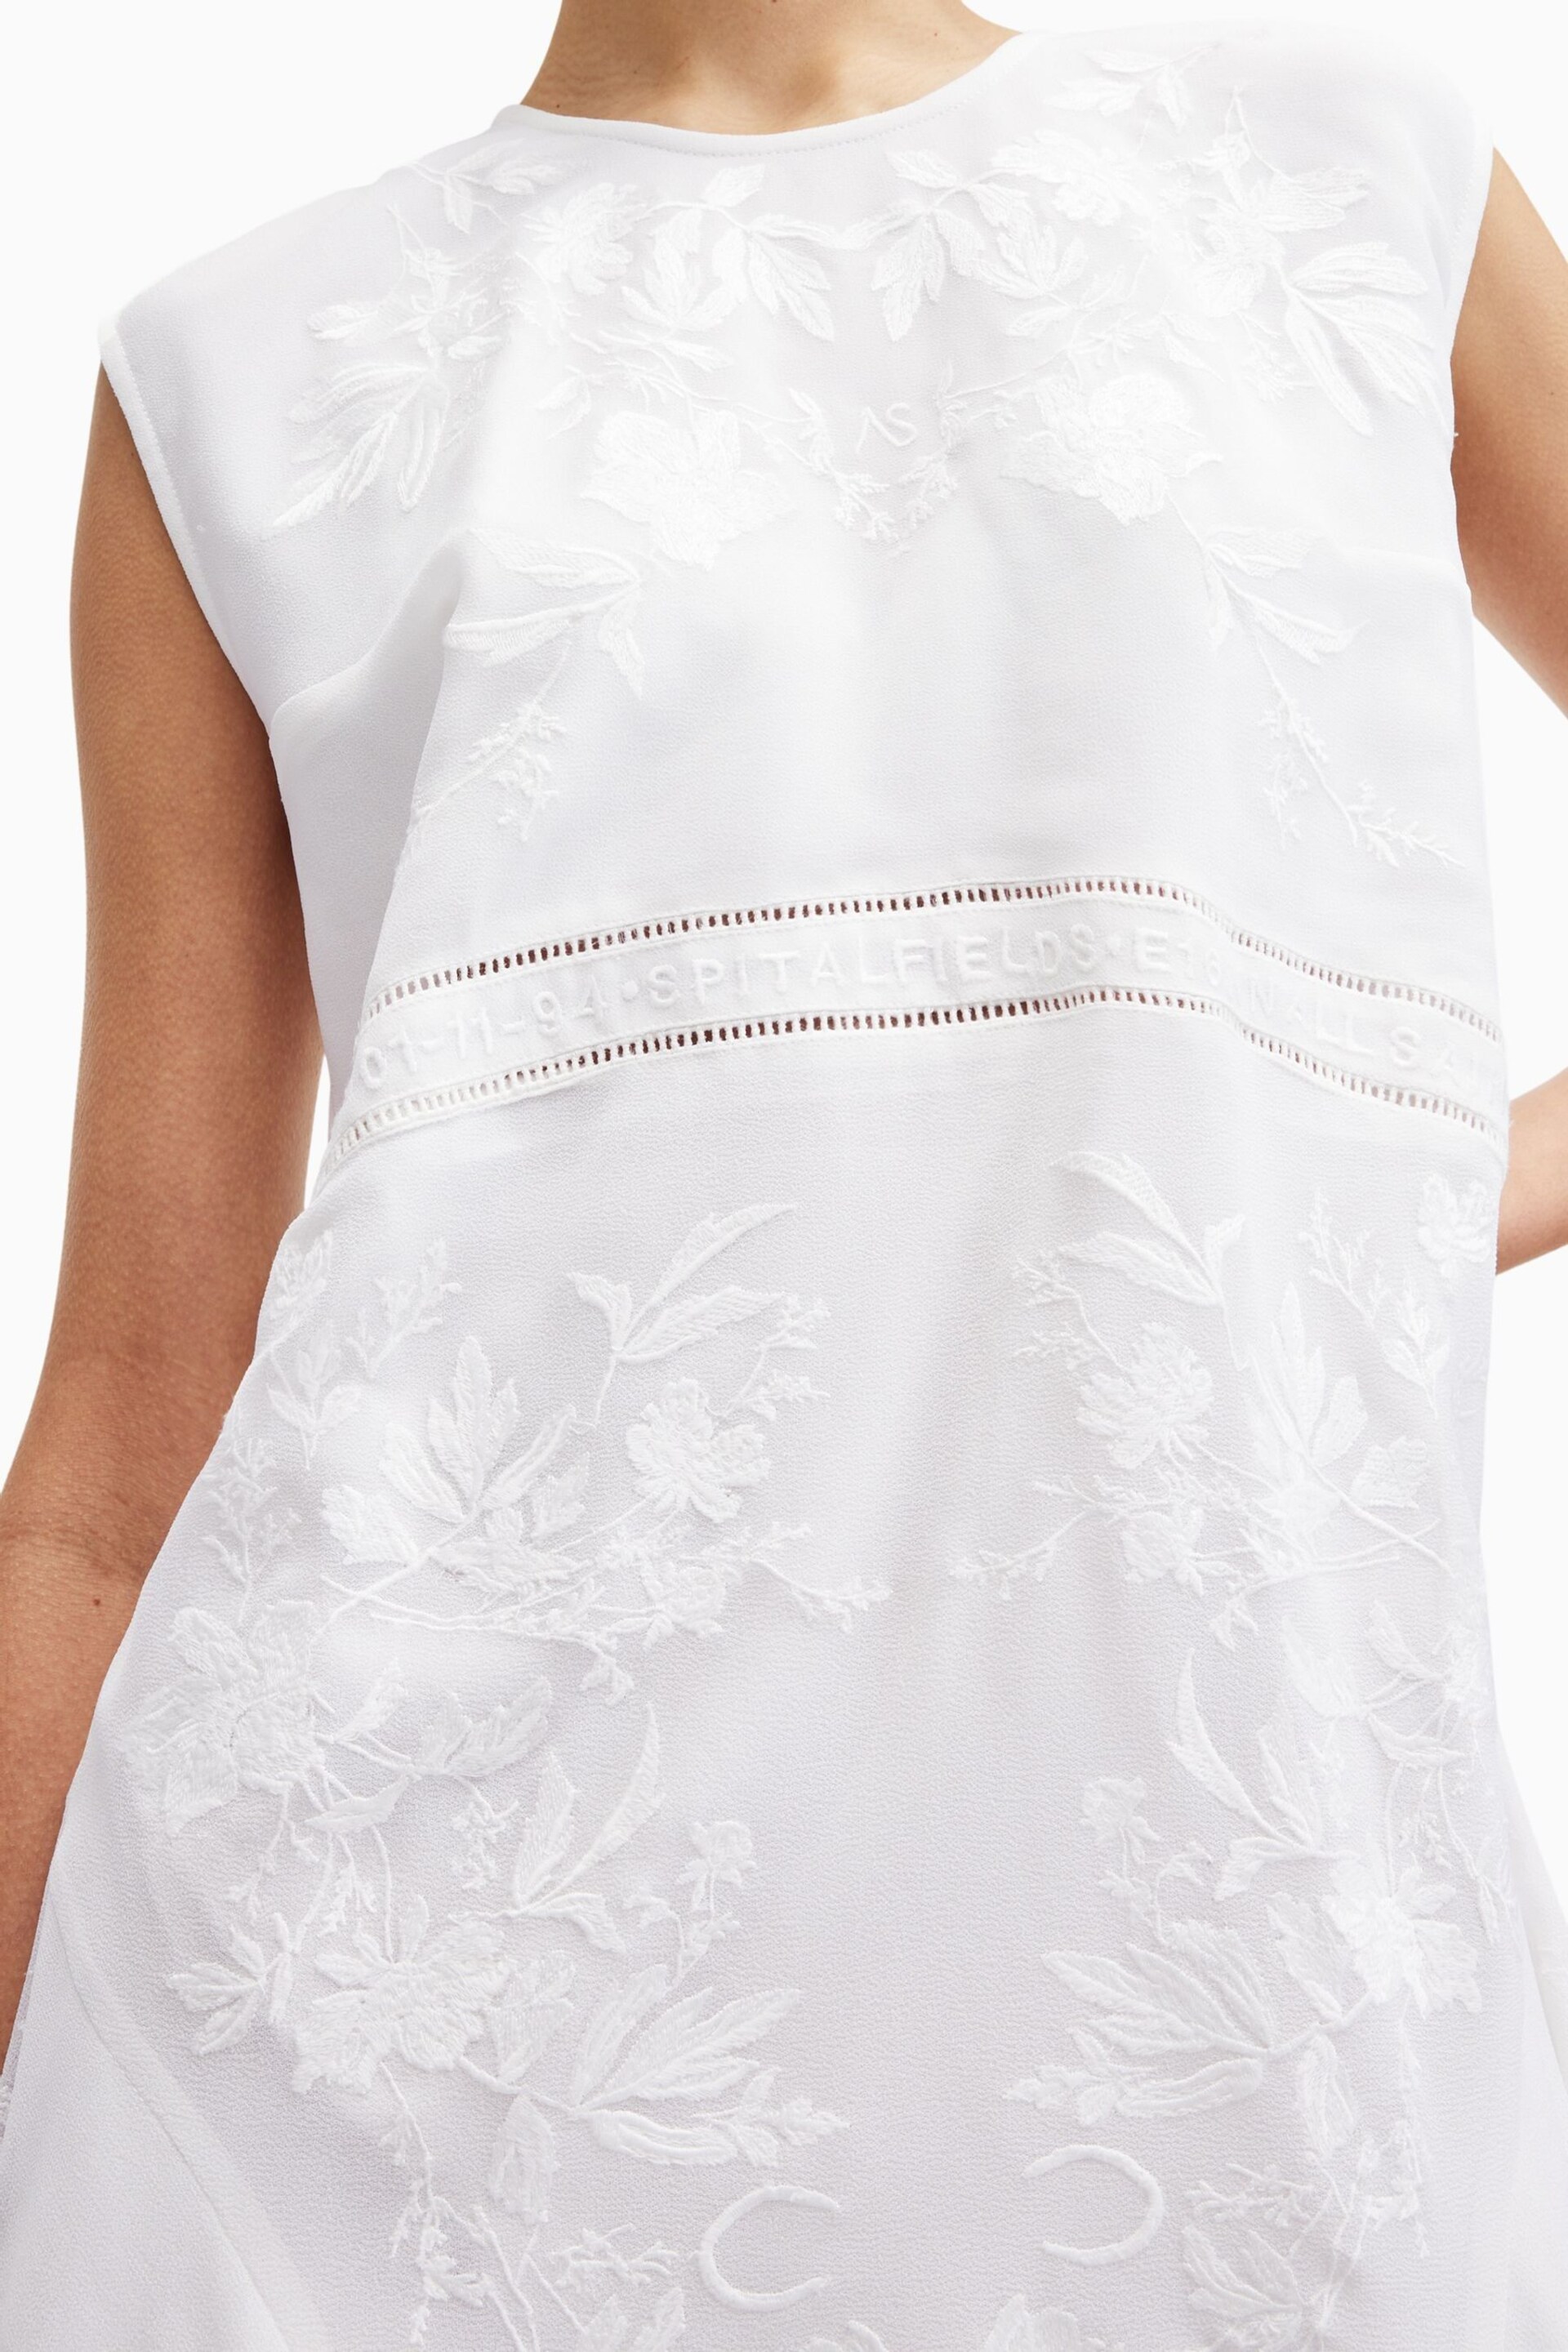 AllSaints White Audrina Emb Dress - Image 3 of 7